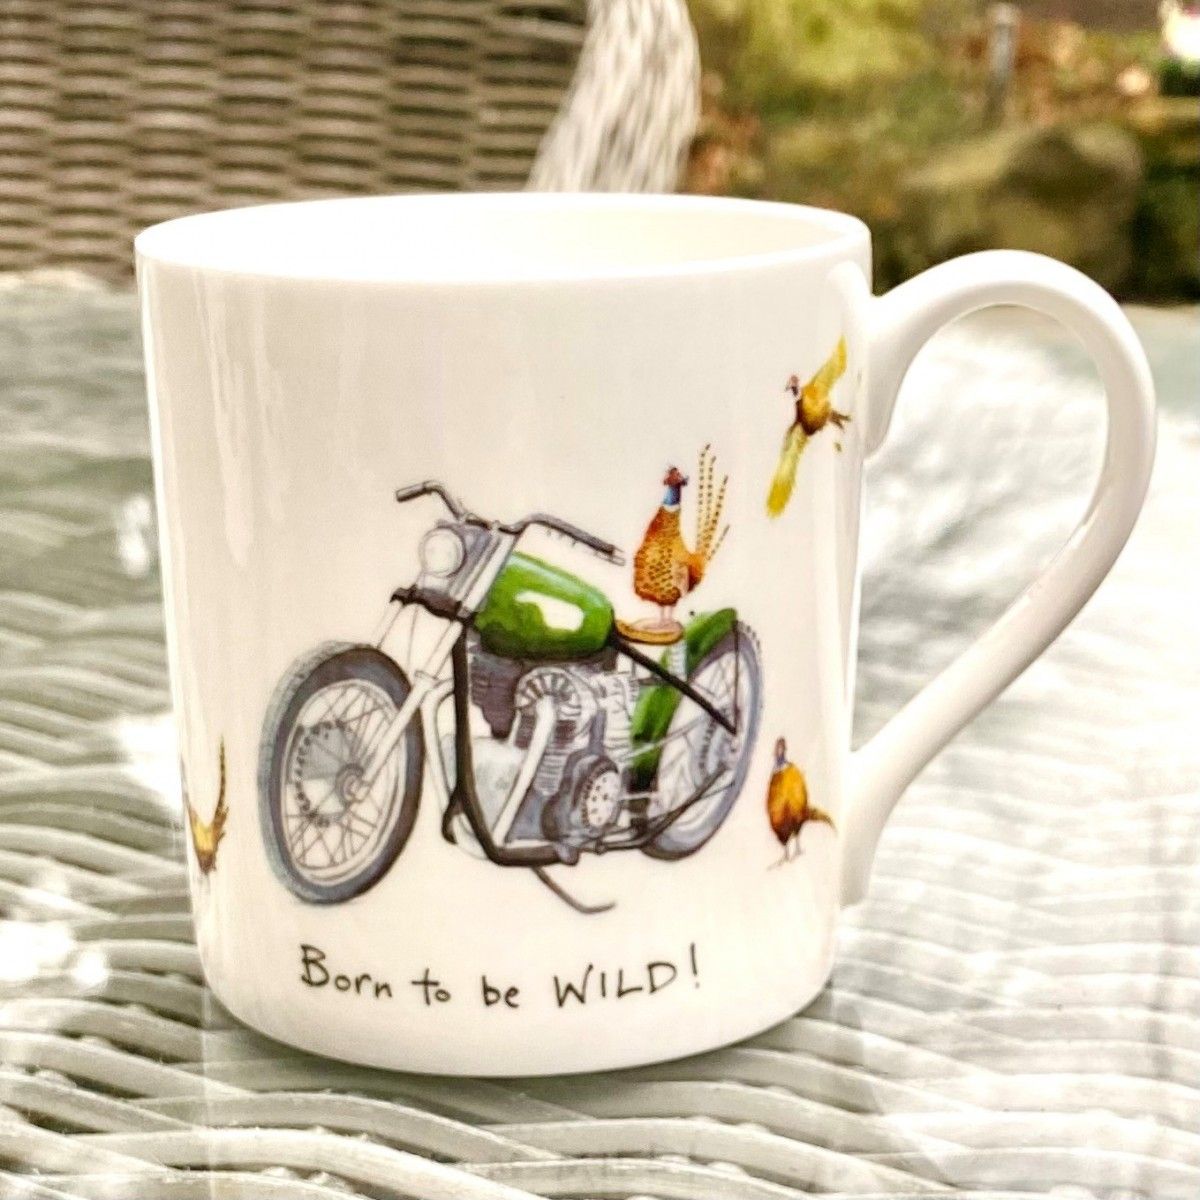 "Born to be Wild!" Motorcycle Mug